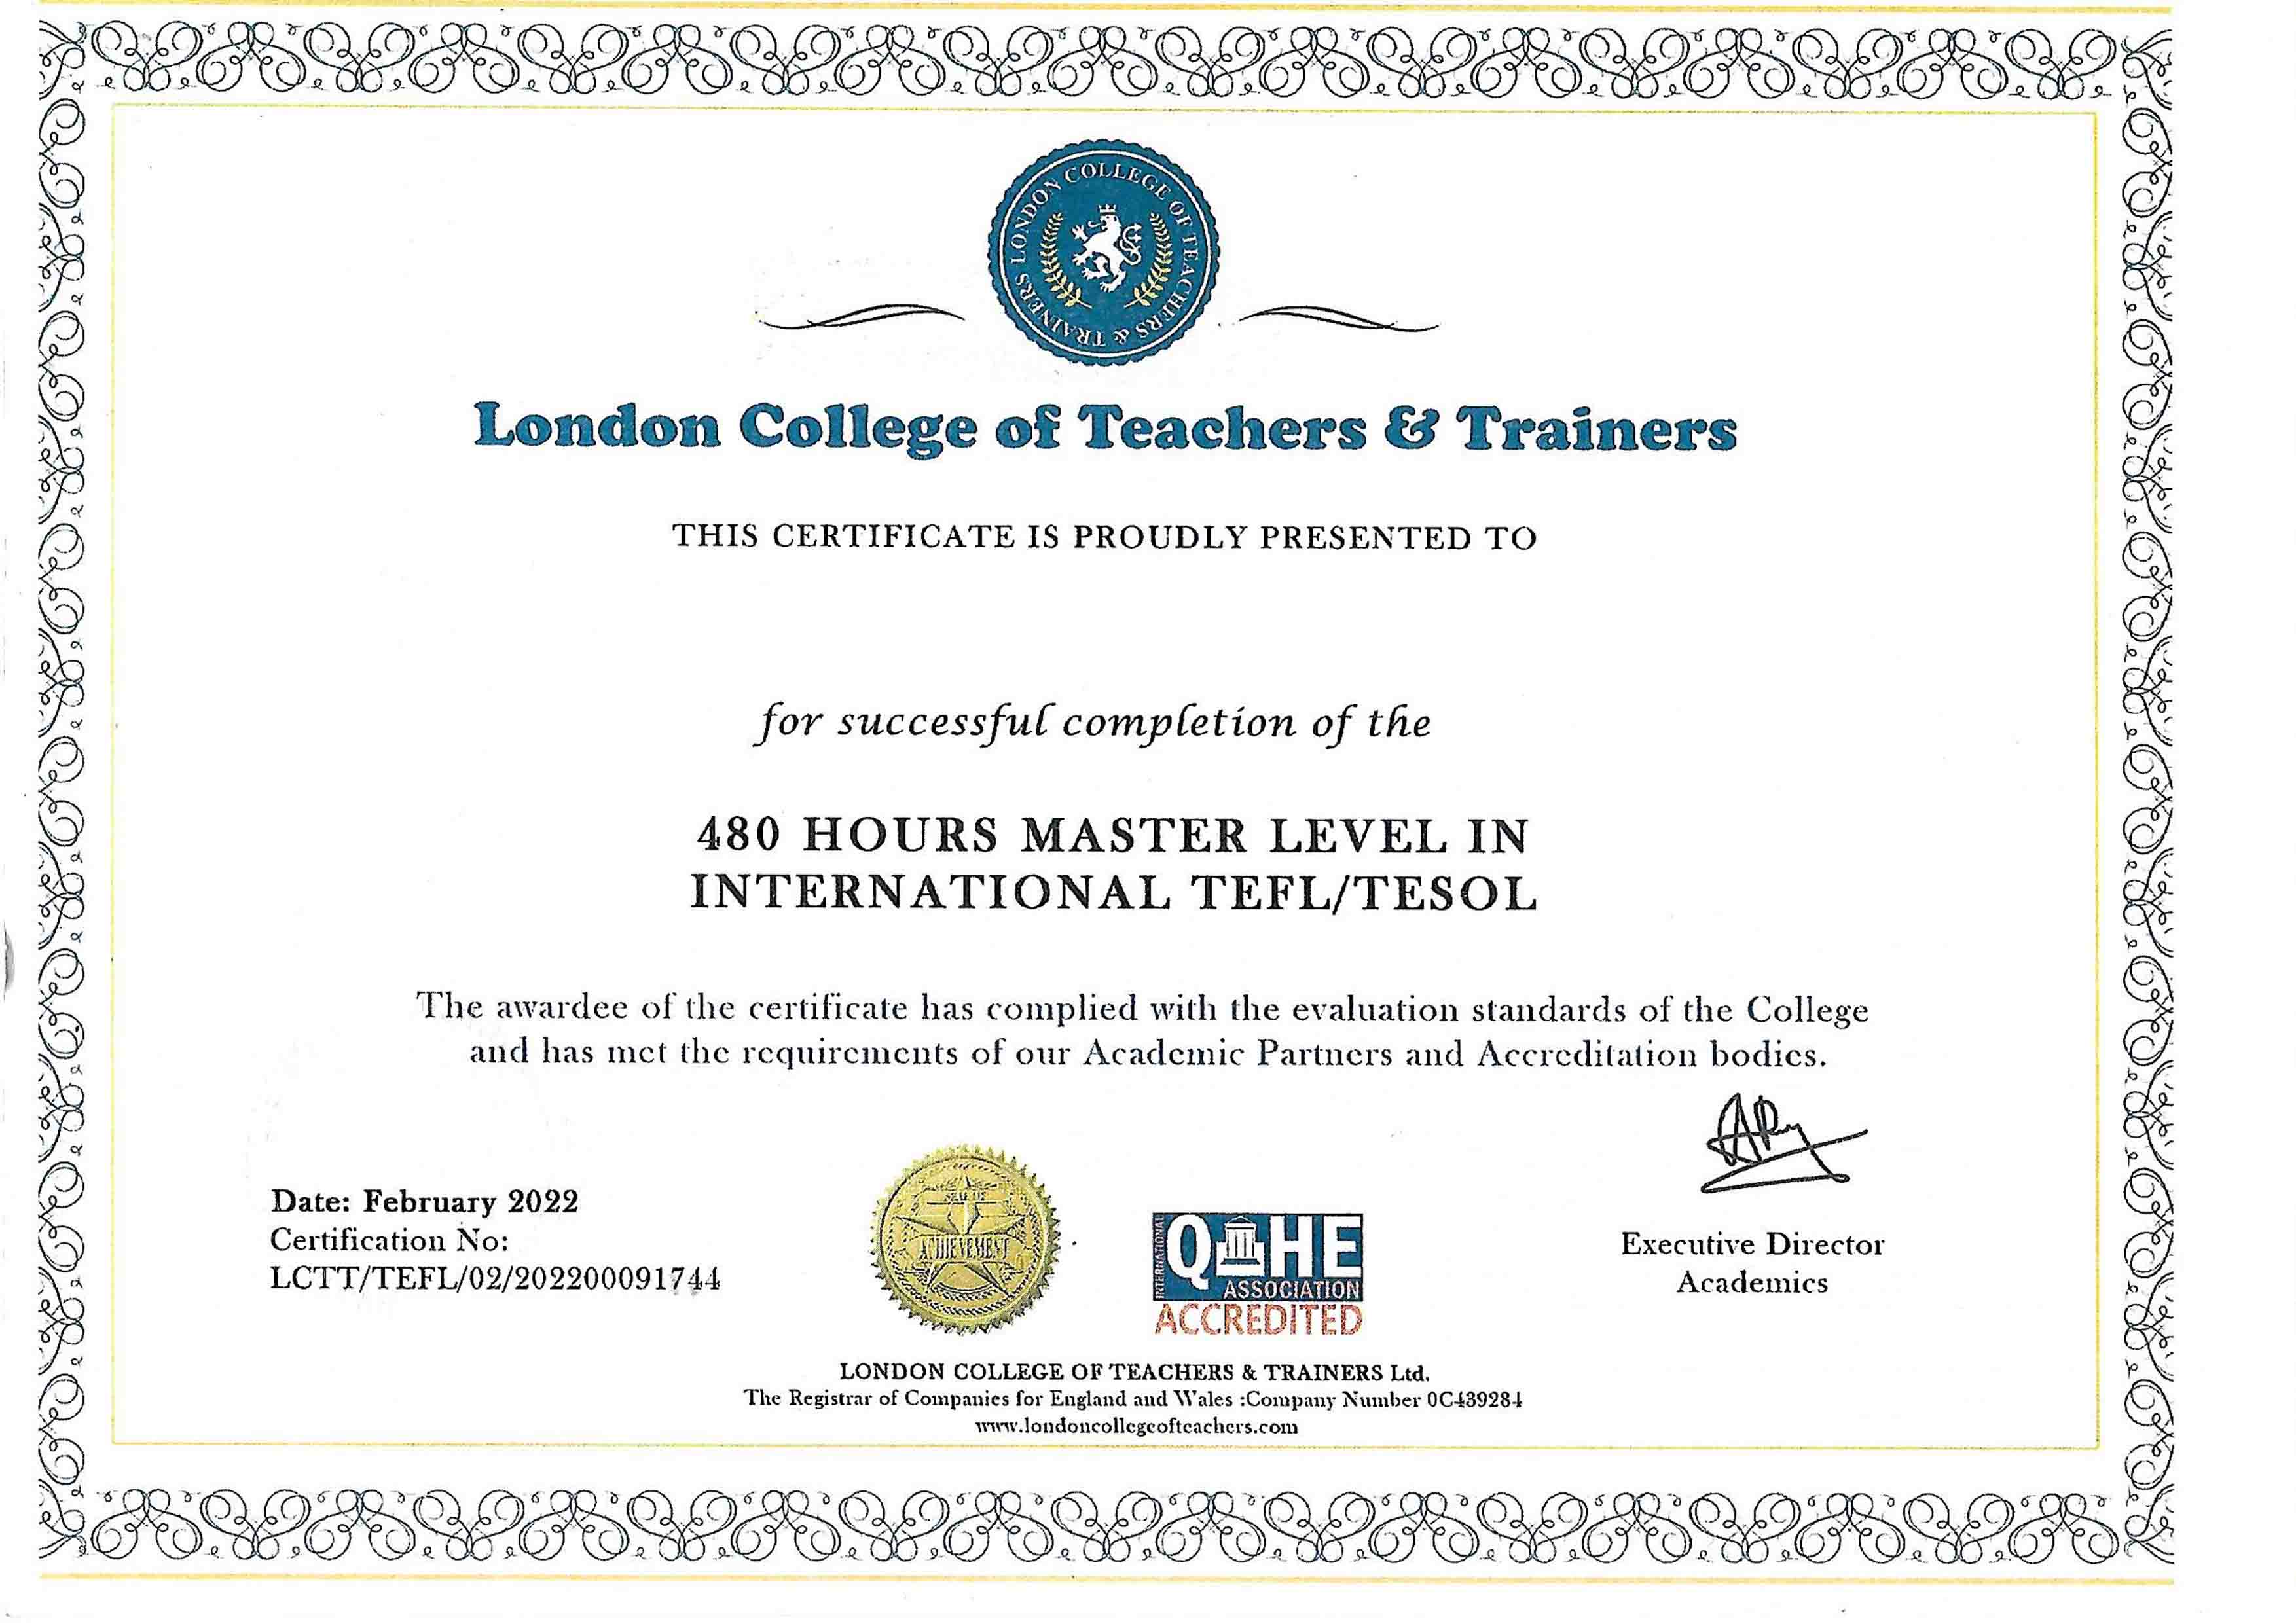 London College of Teachers - Diploma Certificate